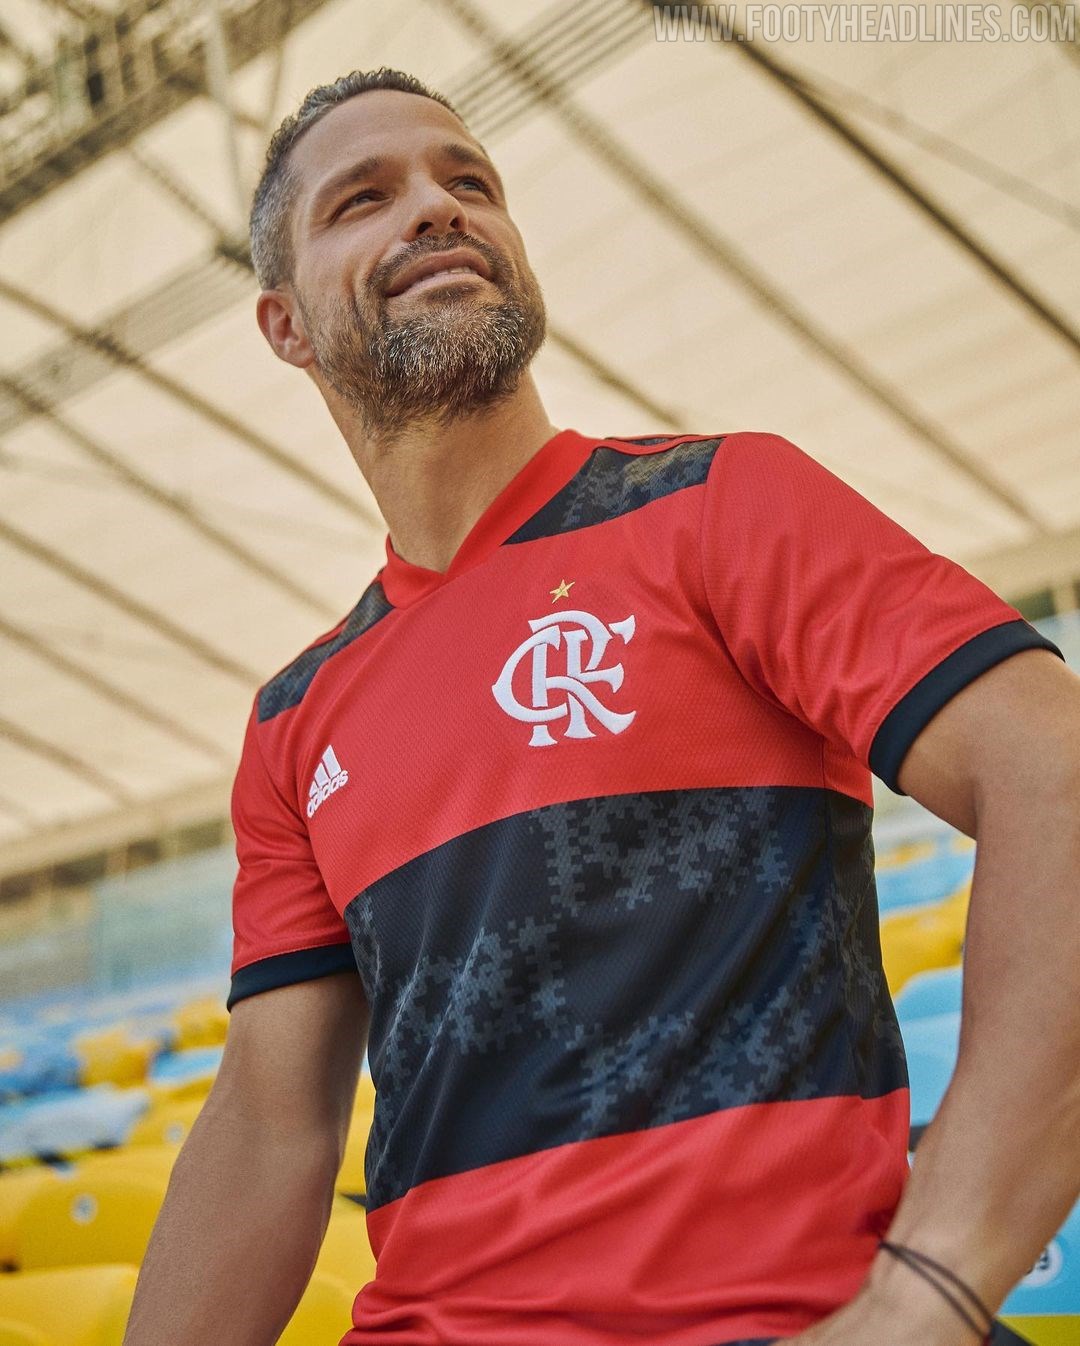 Adidas Flamengo Home Released - Origami Numbers - Footy Headlines